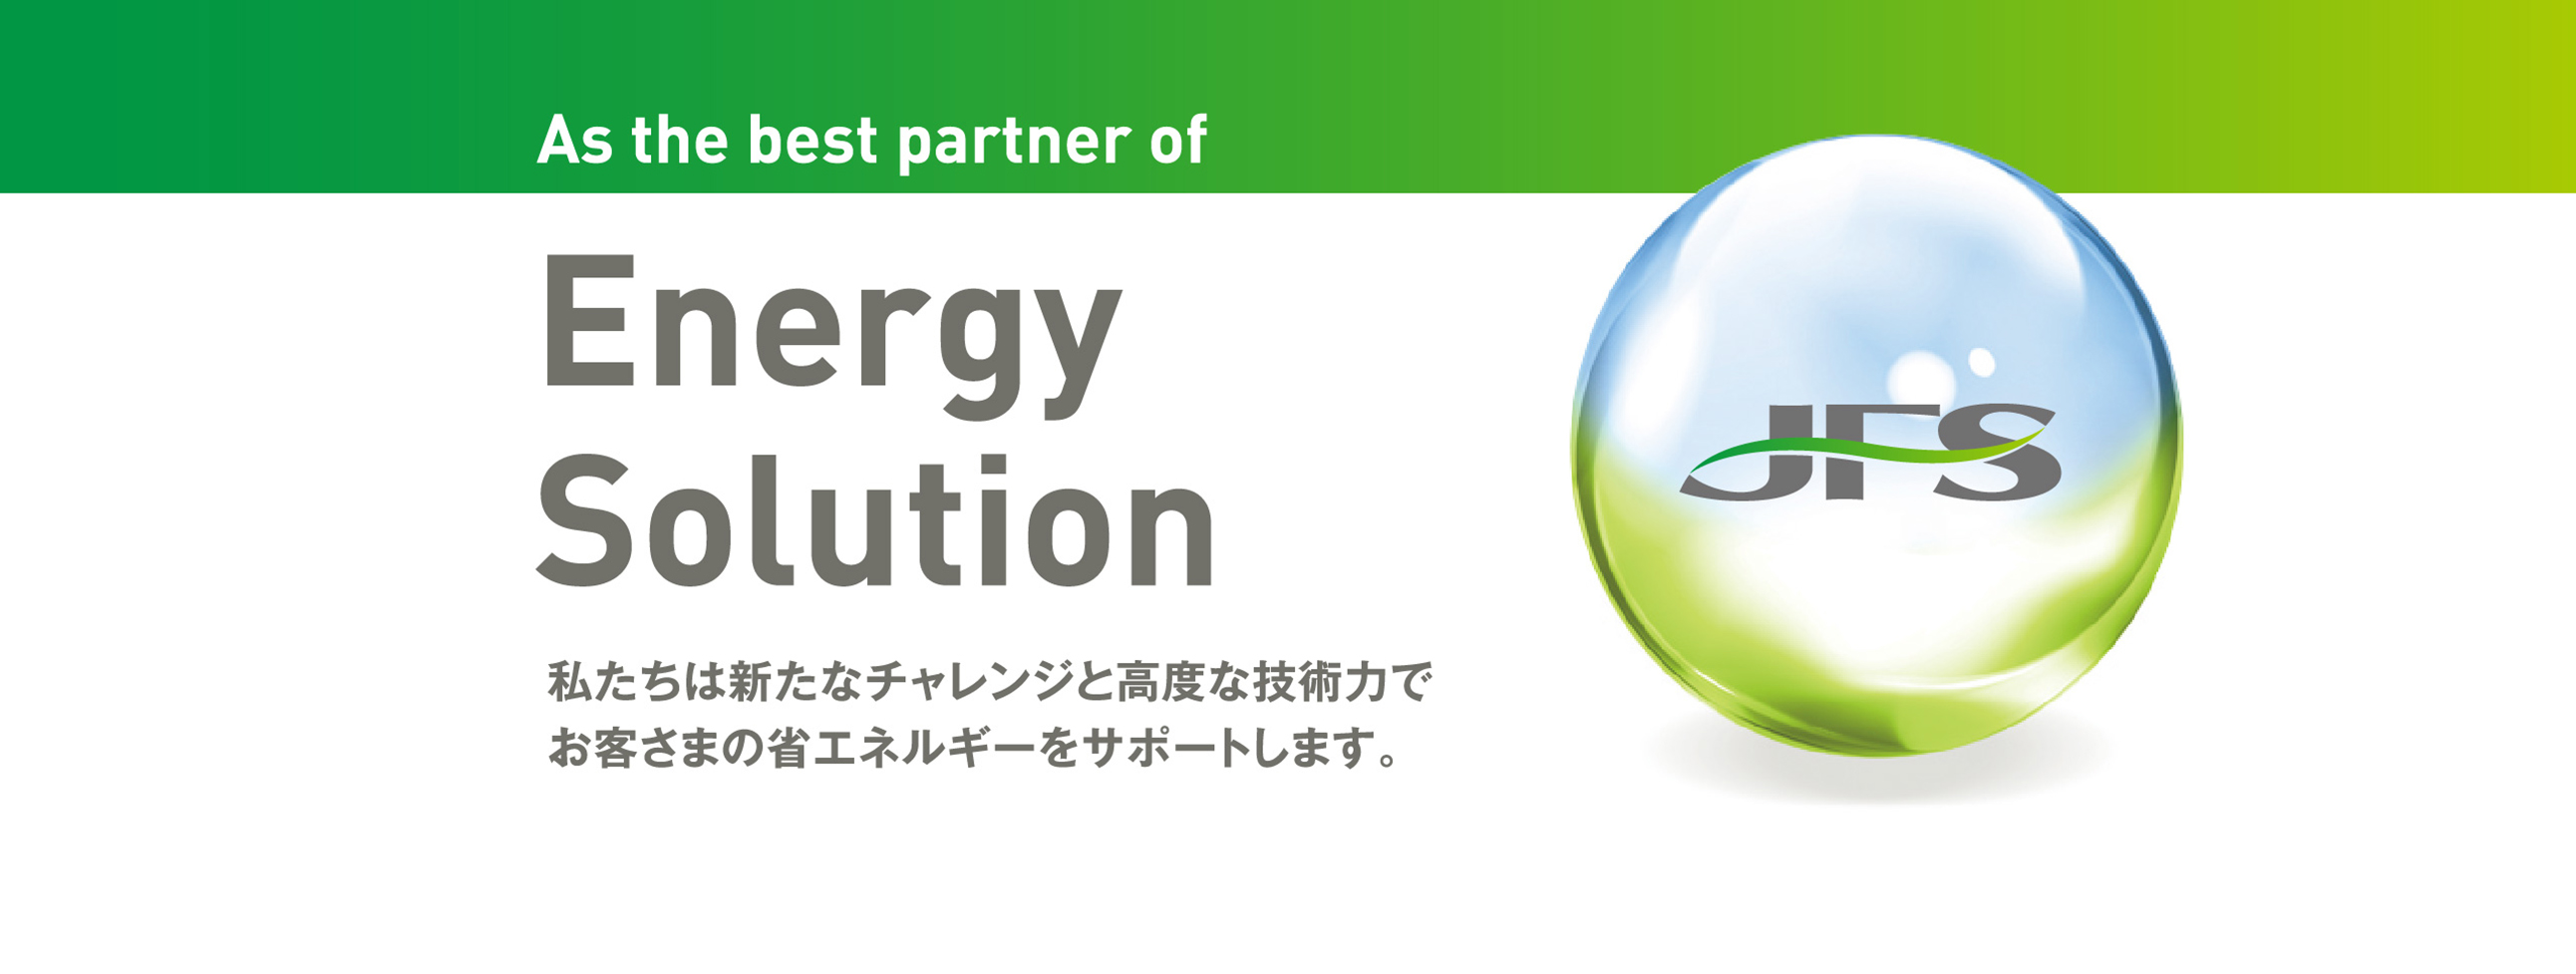 As the best partner of Energy Solution 私たちは新たなチャレンジと高度な技術力でお客さまの省エネルギーをサポートします。